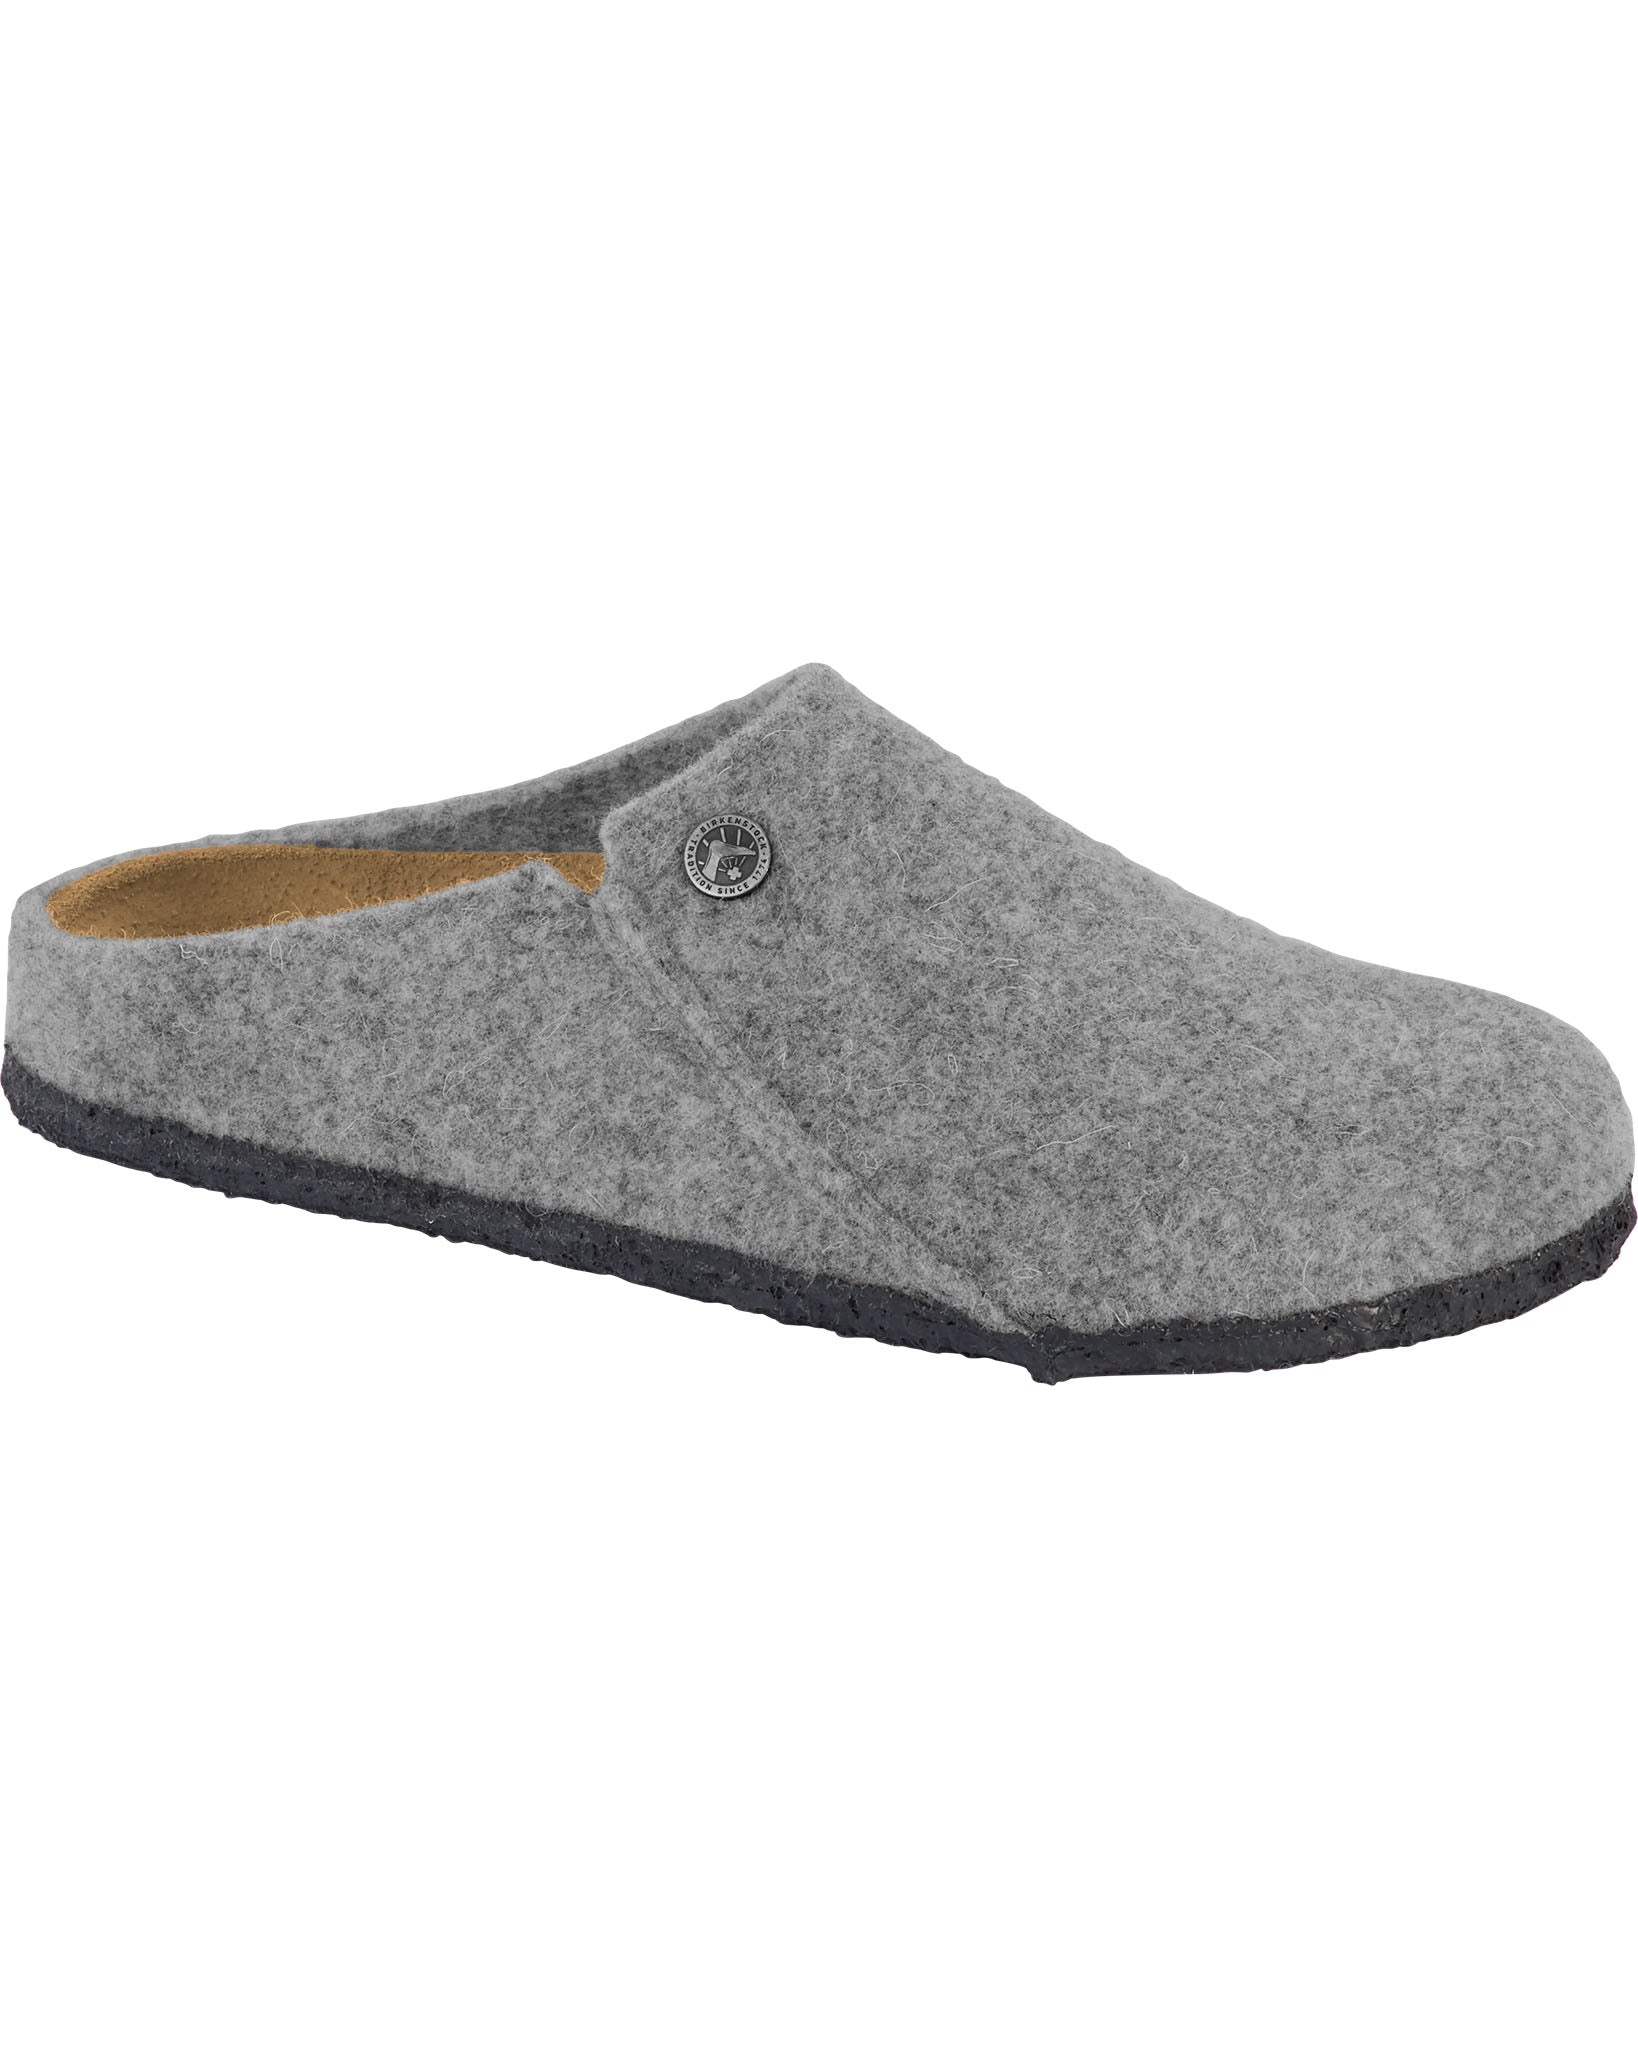 Zermatt Light Grey Wool Felt Slippers